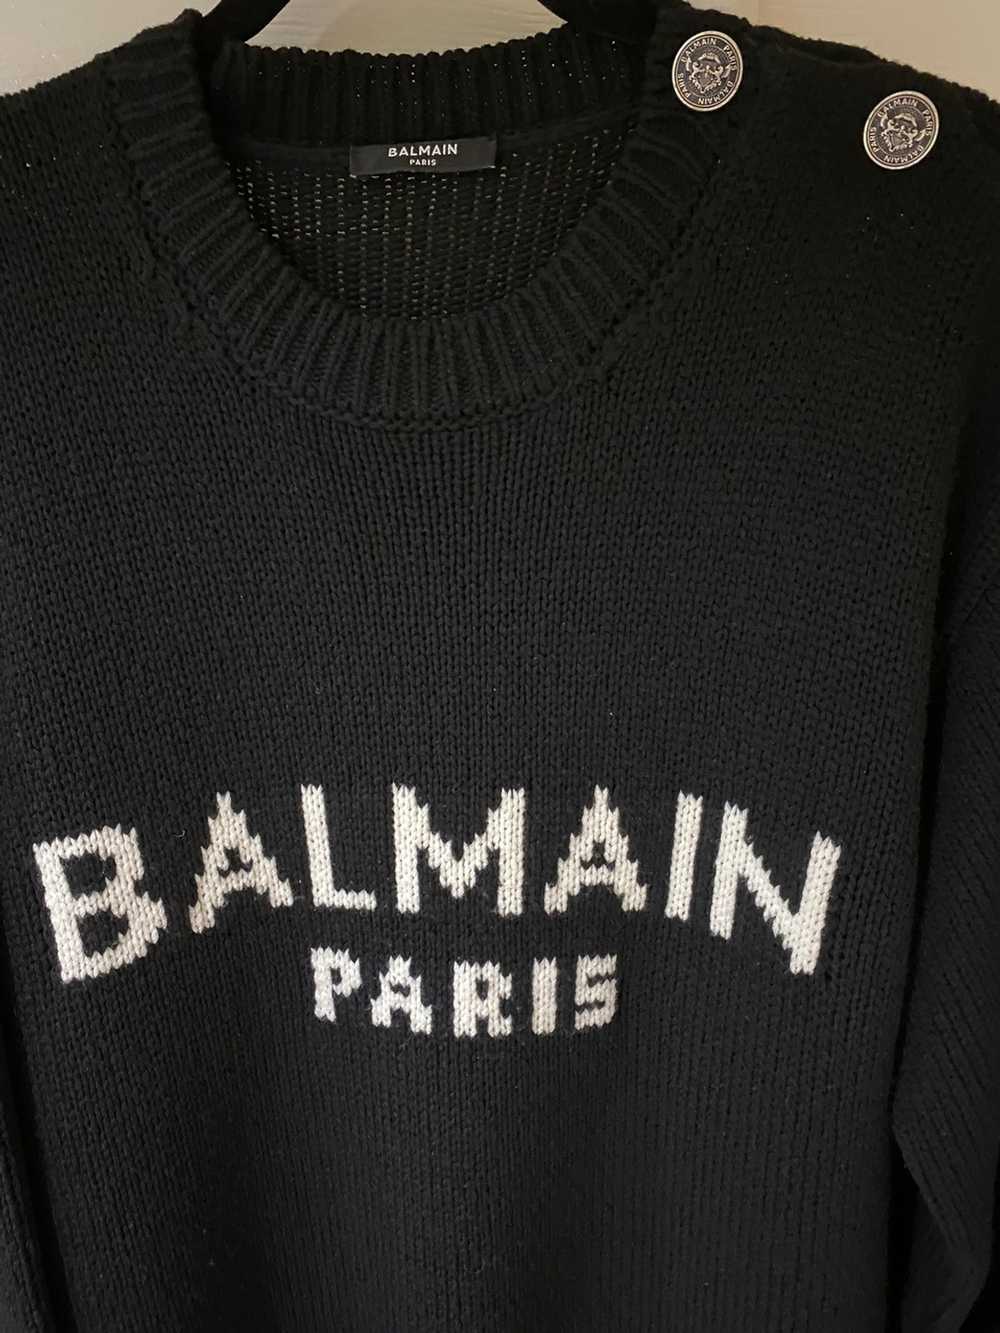 Balmain Balmain Sweater - image 2